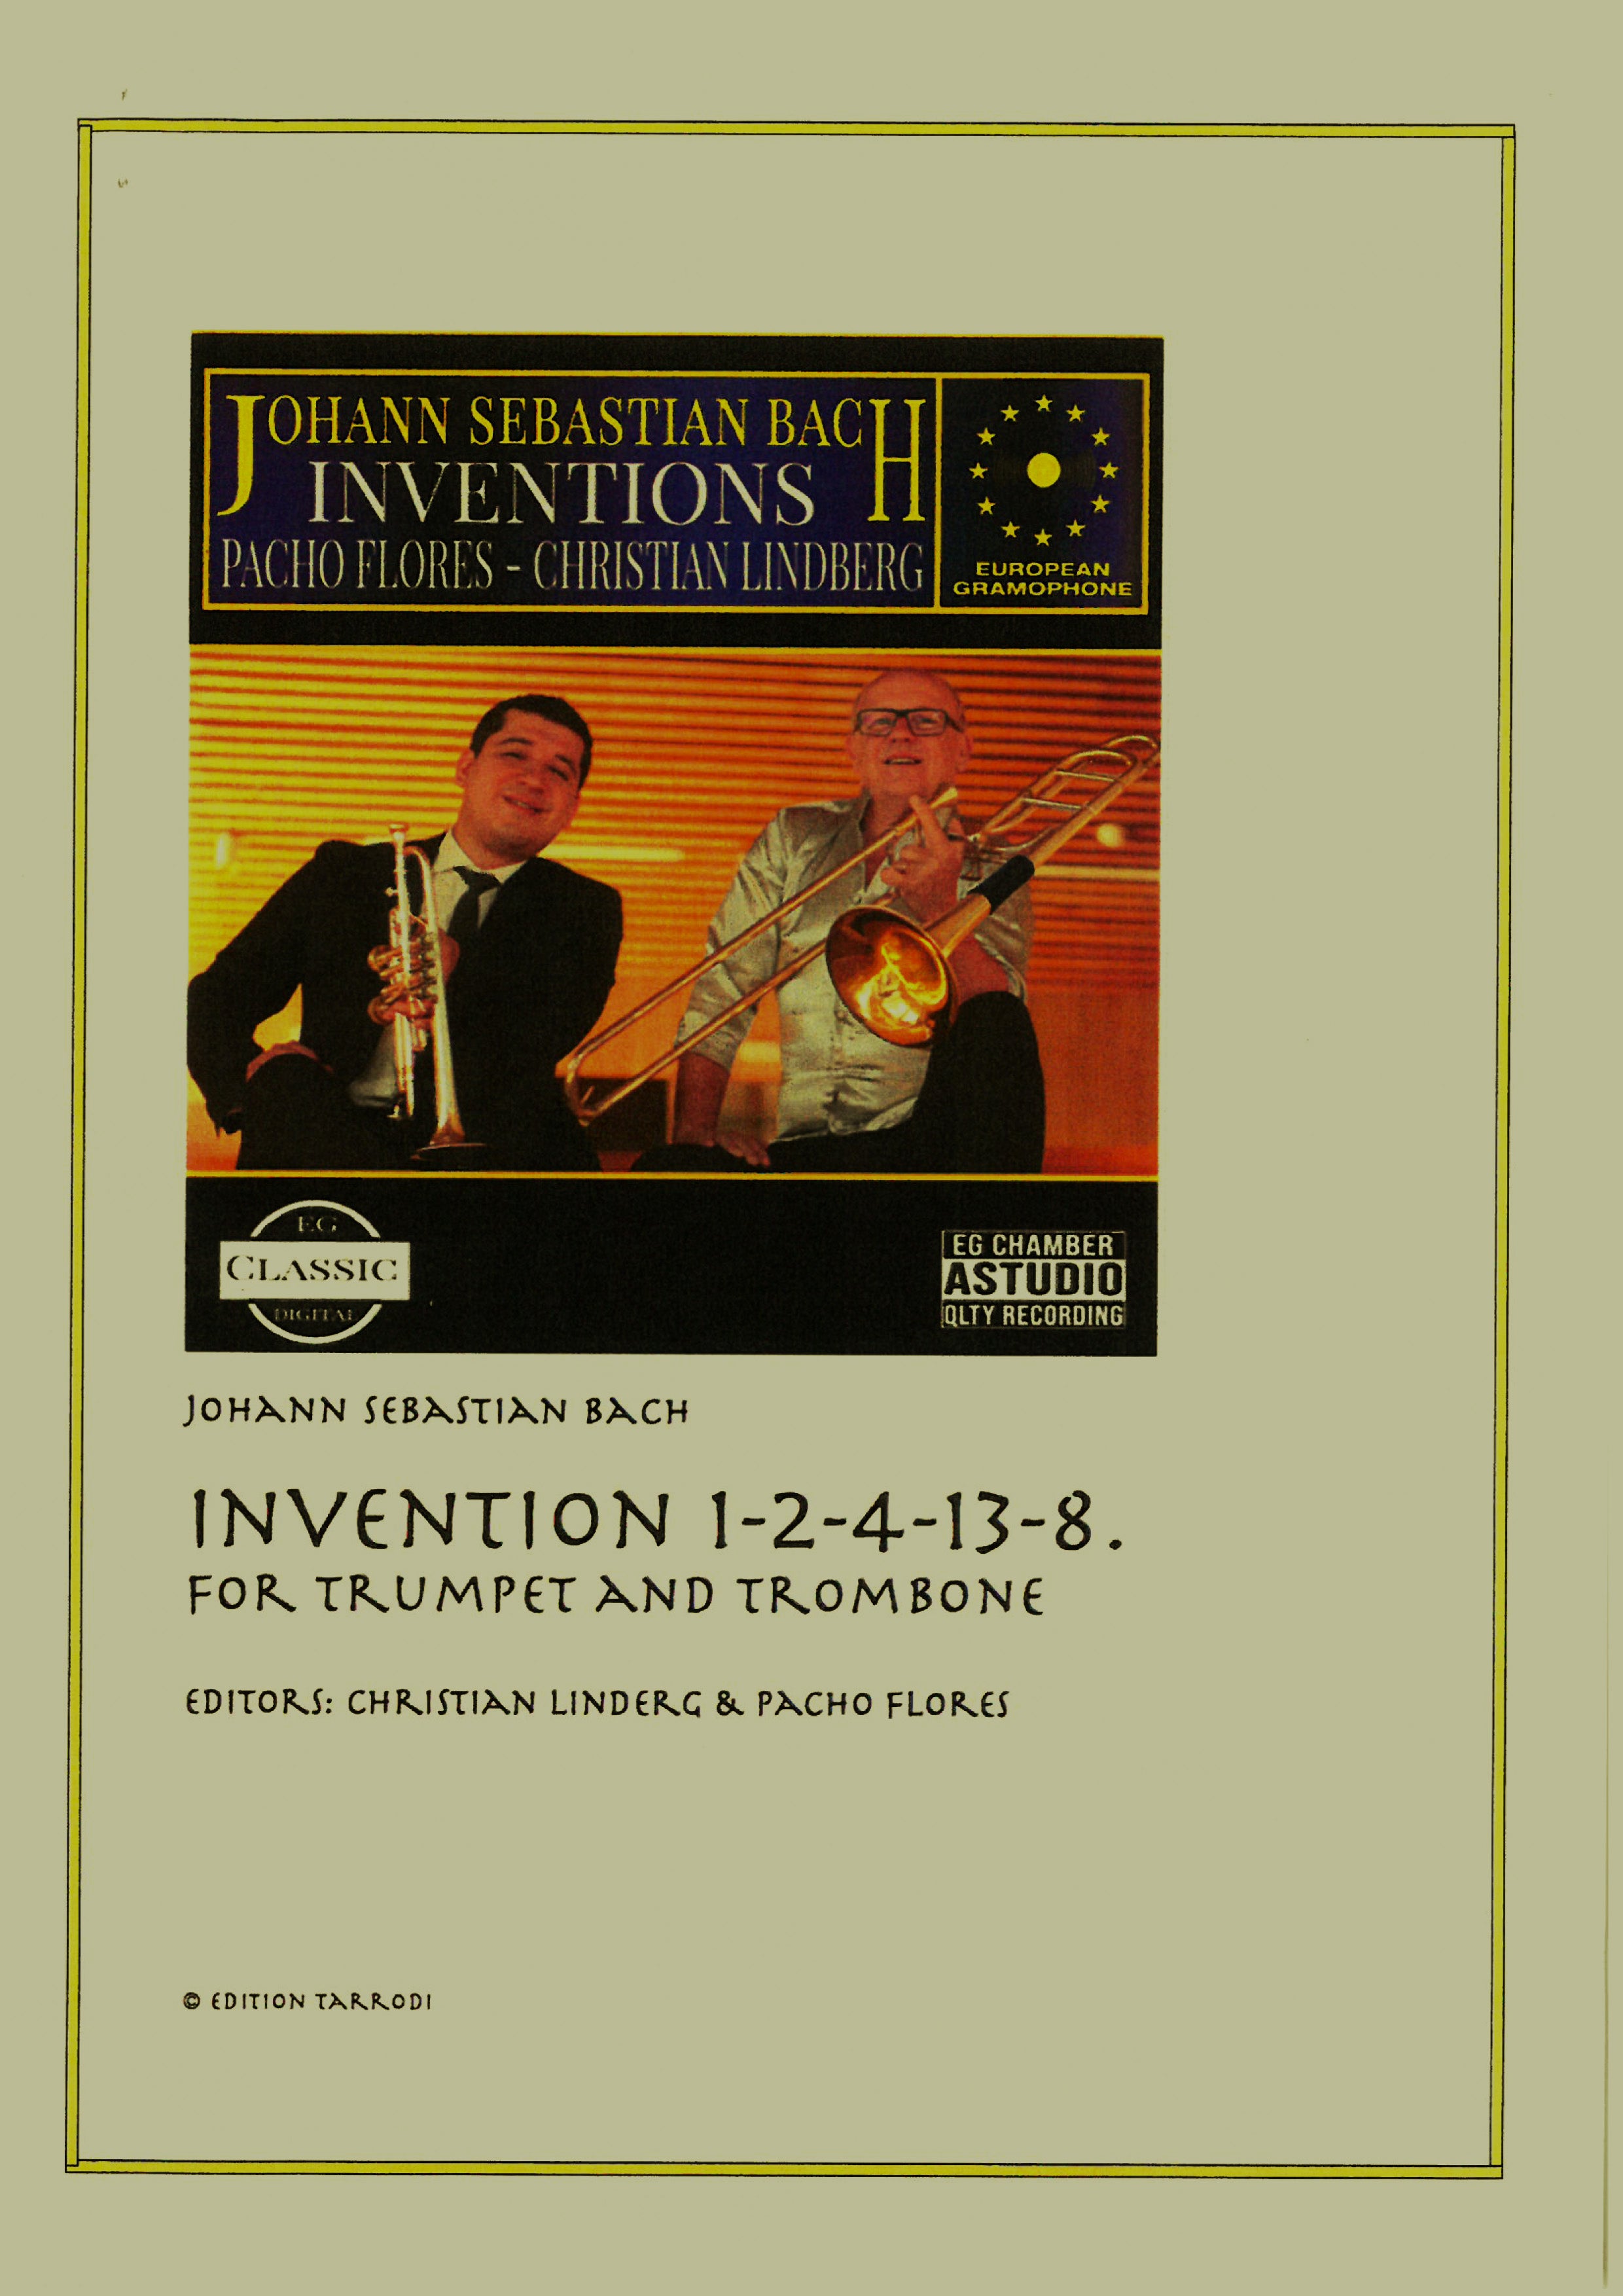 Christian Lindberg / Pacho Flores - Invention 1-2-3-13-8